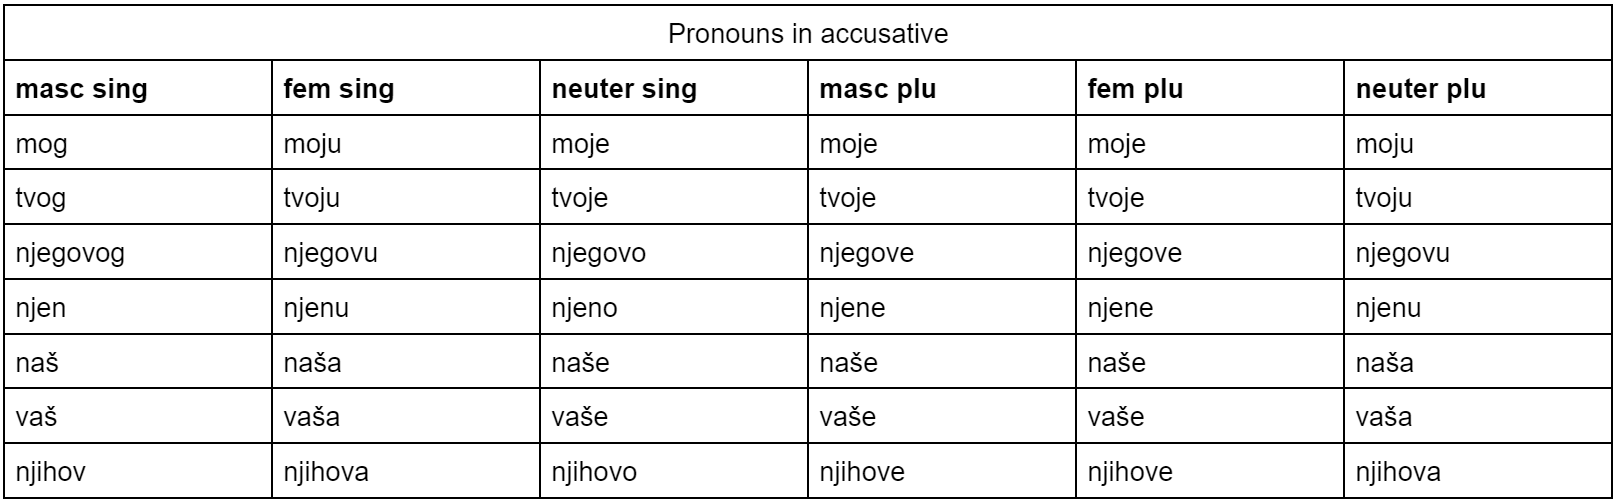 Pronouns in accusative